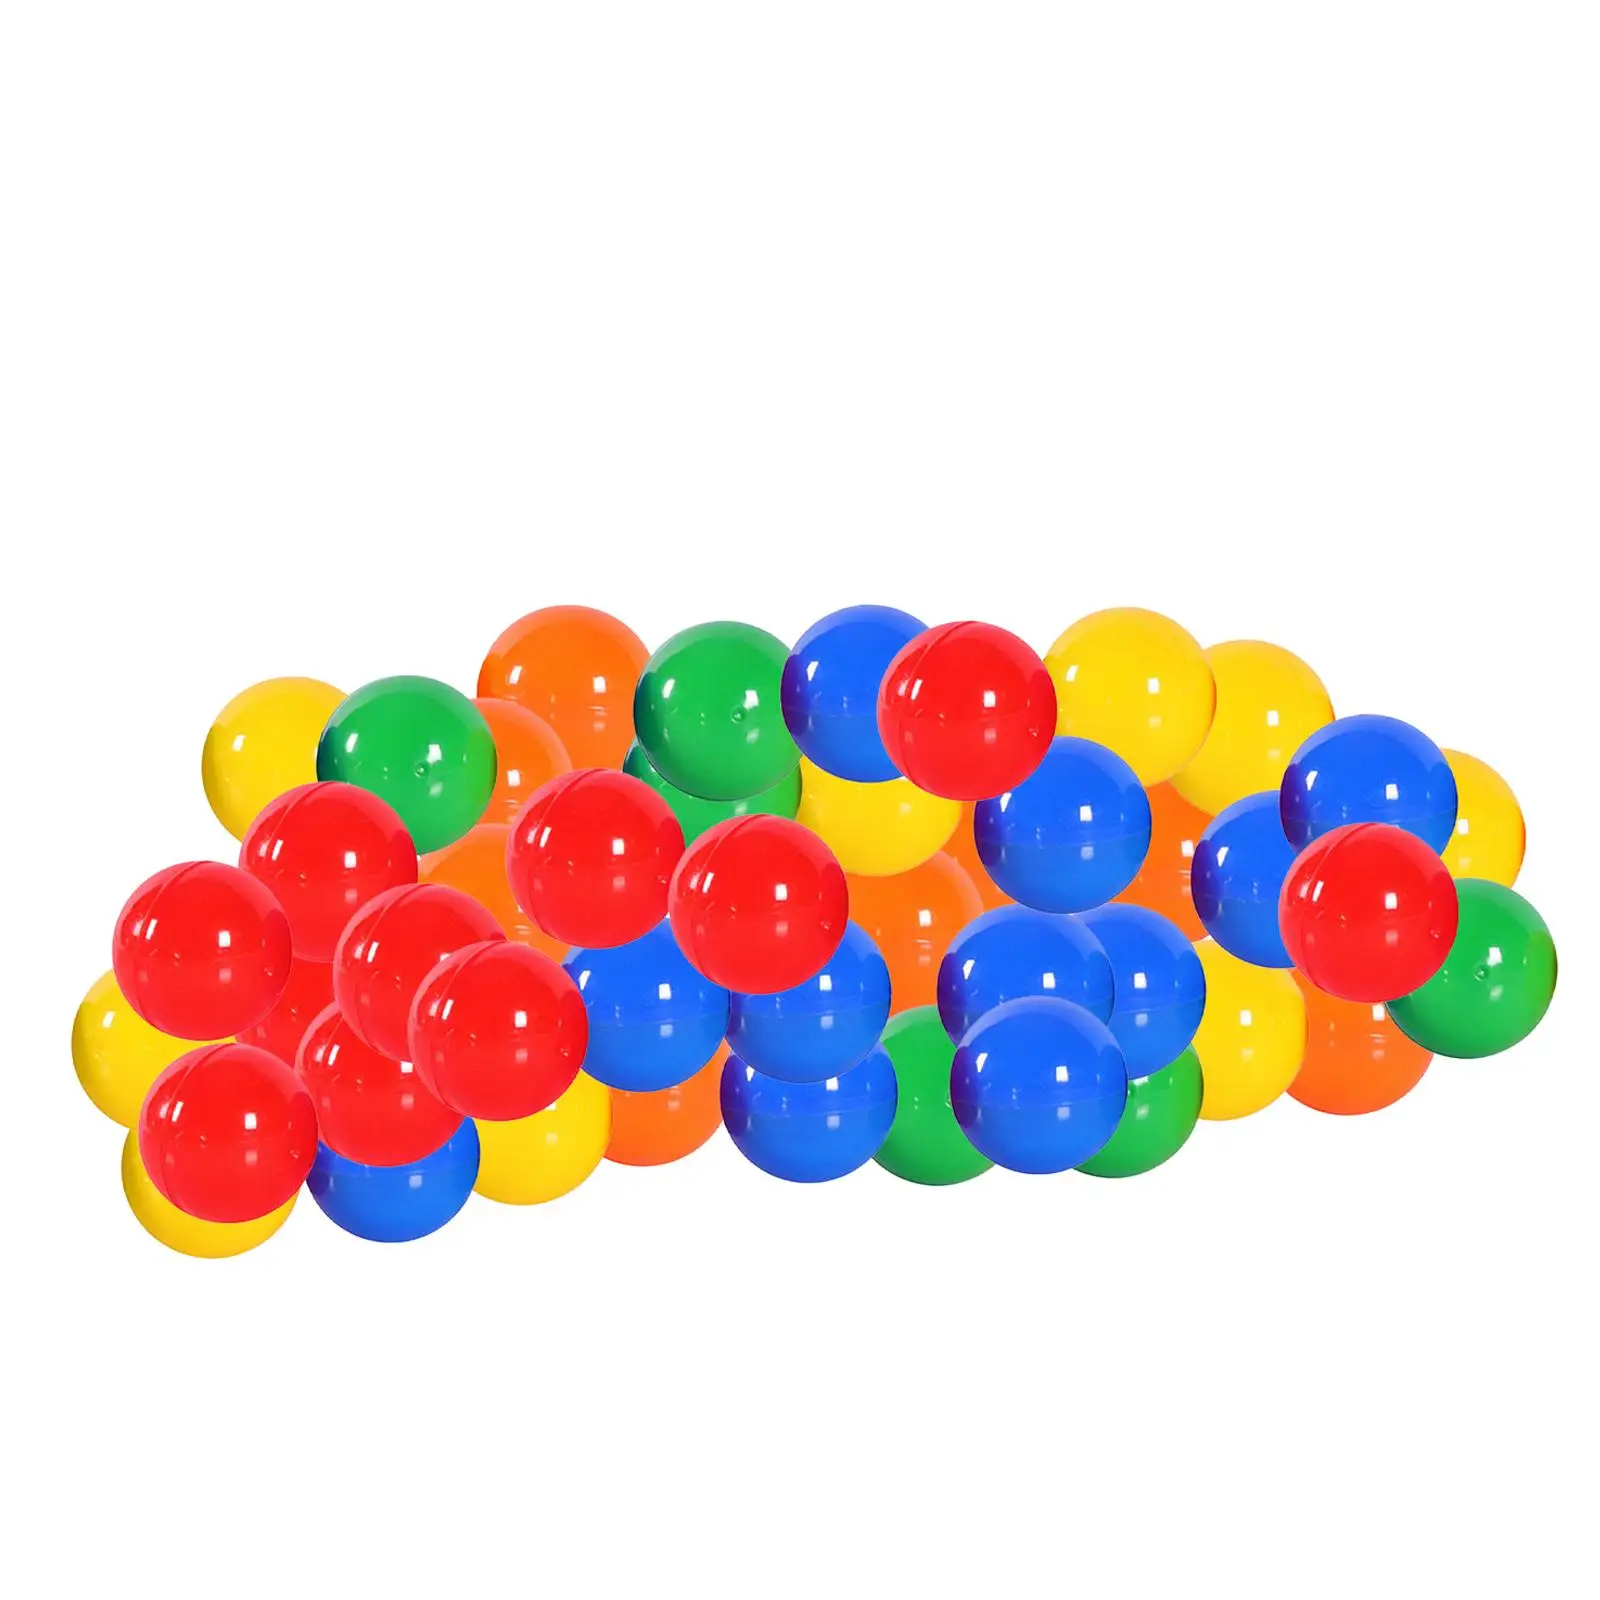 50x Bingo Ball Accs Portable Raffle Balls for Camping Household Family